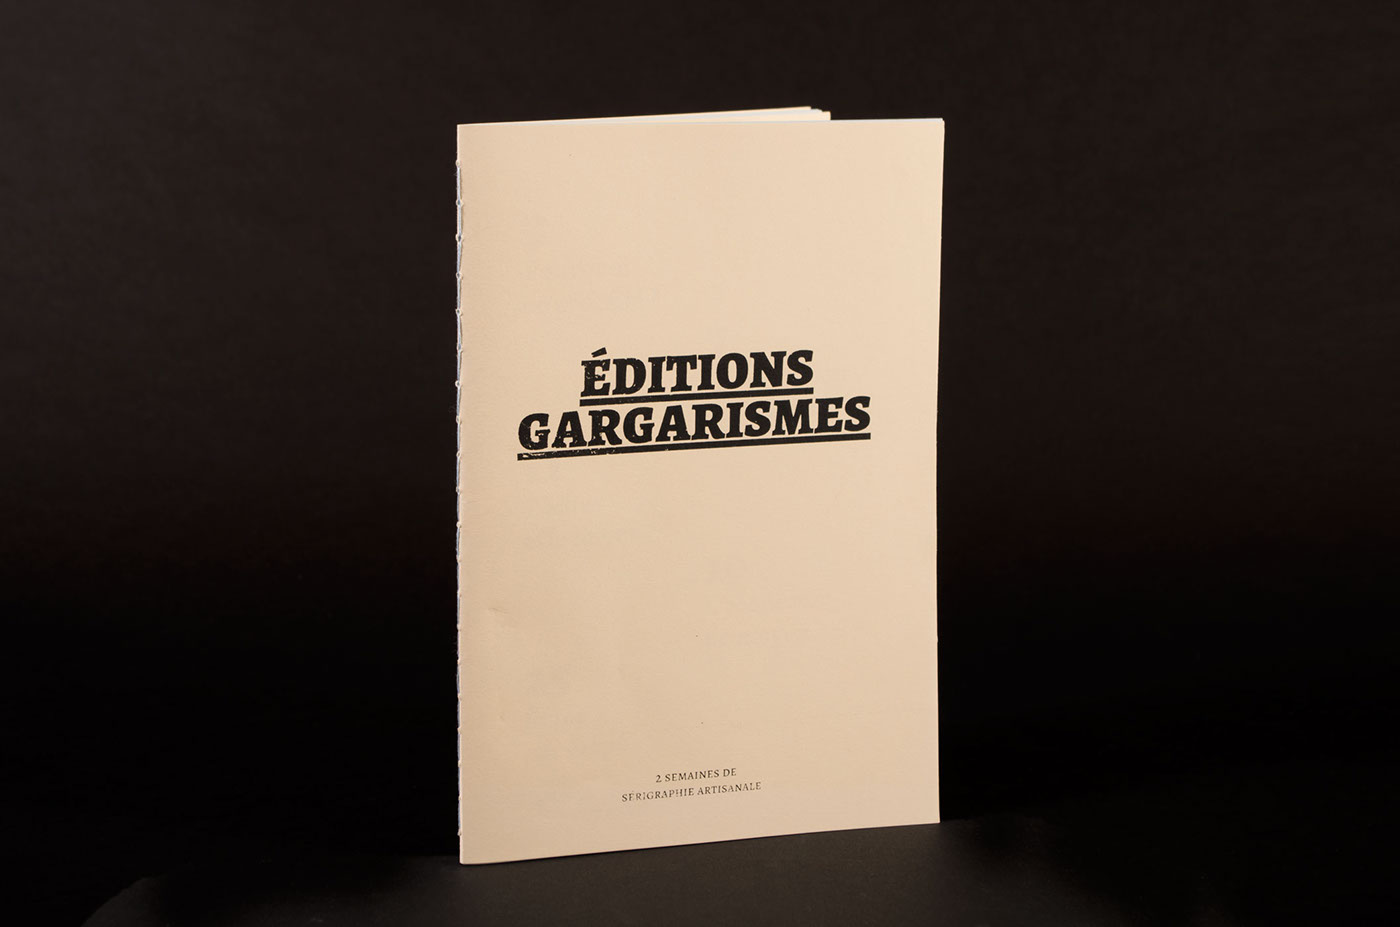 internship report gargarismes strasbourg silkscreen DIY binding open source edition artisanal